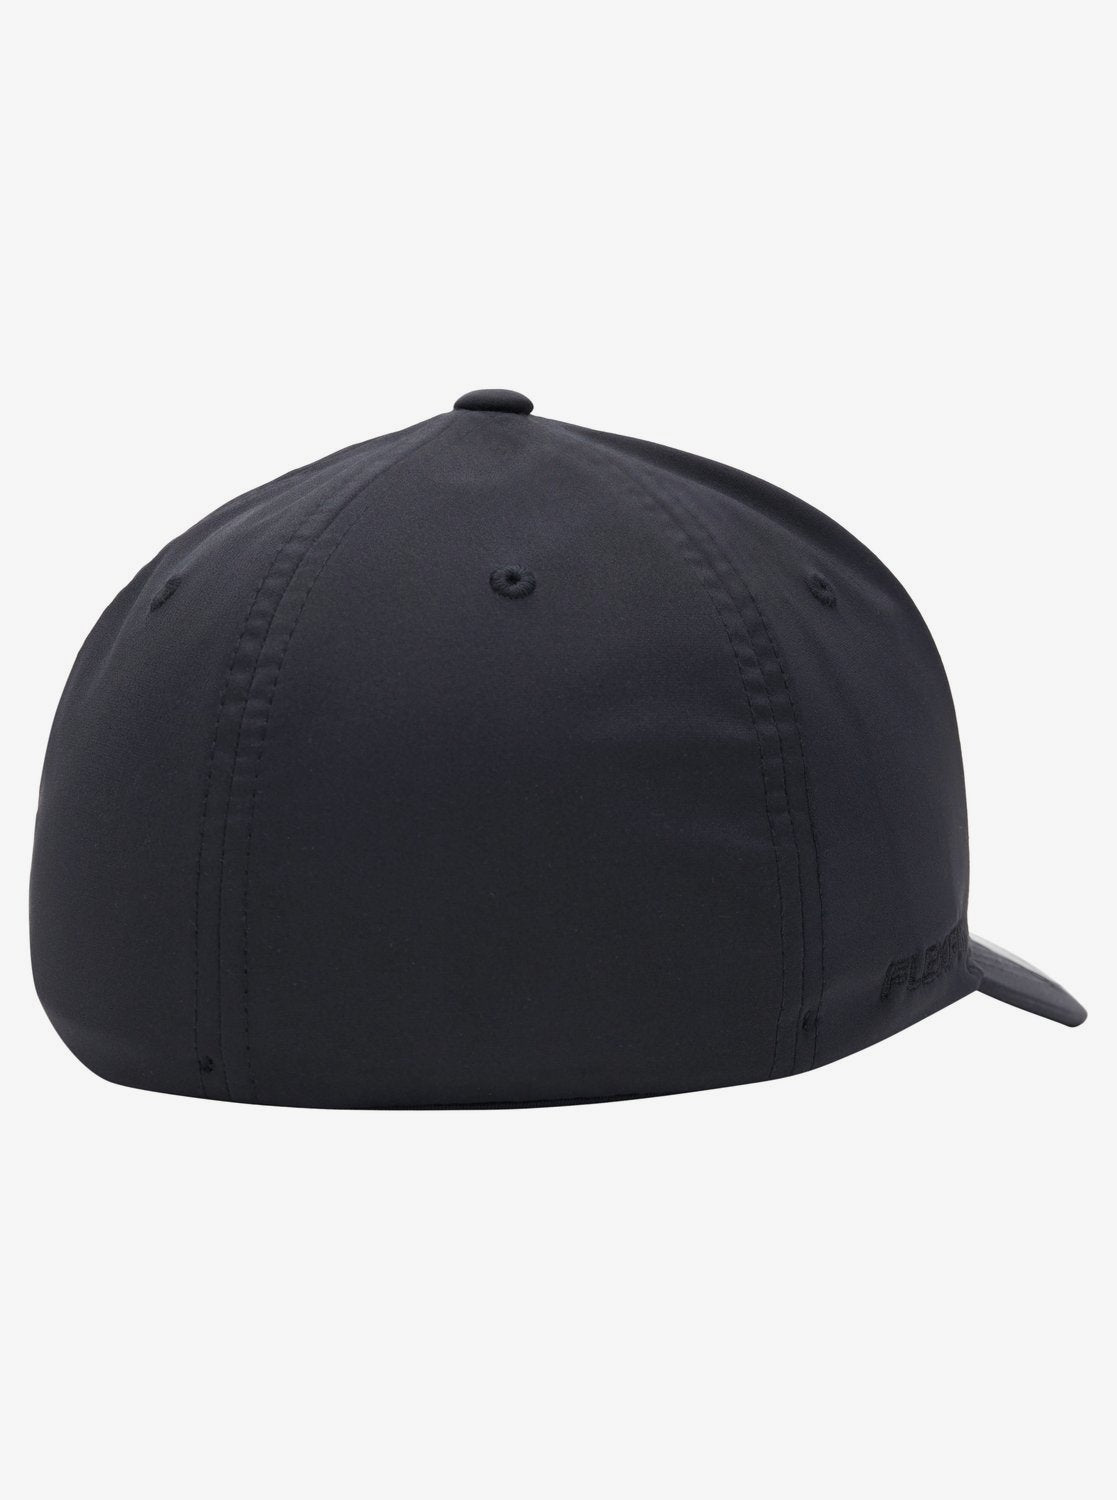 QUIKSILVER Amped Up Hat - True Black